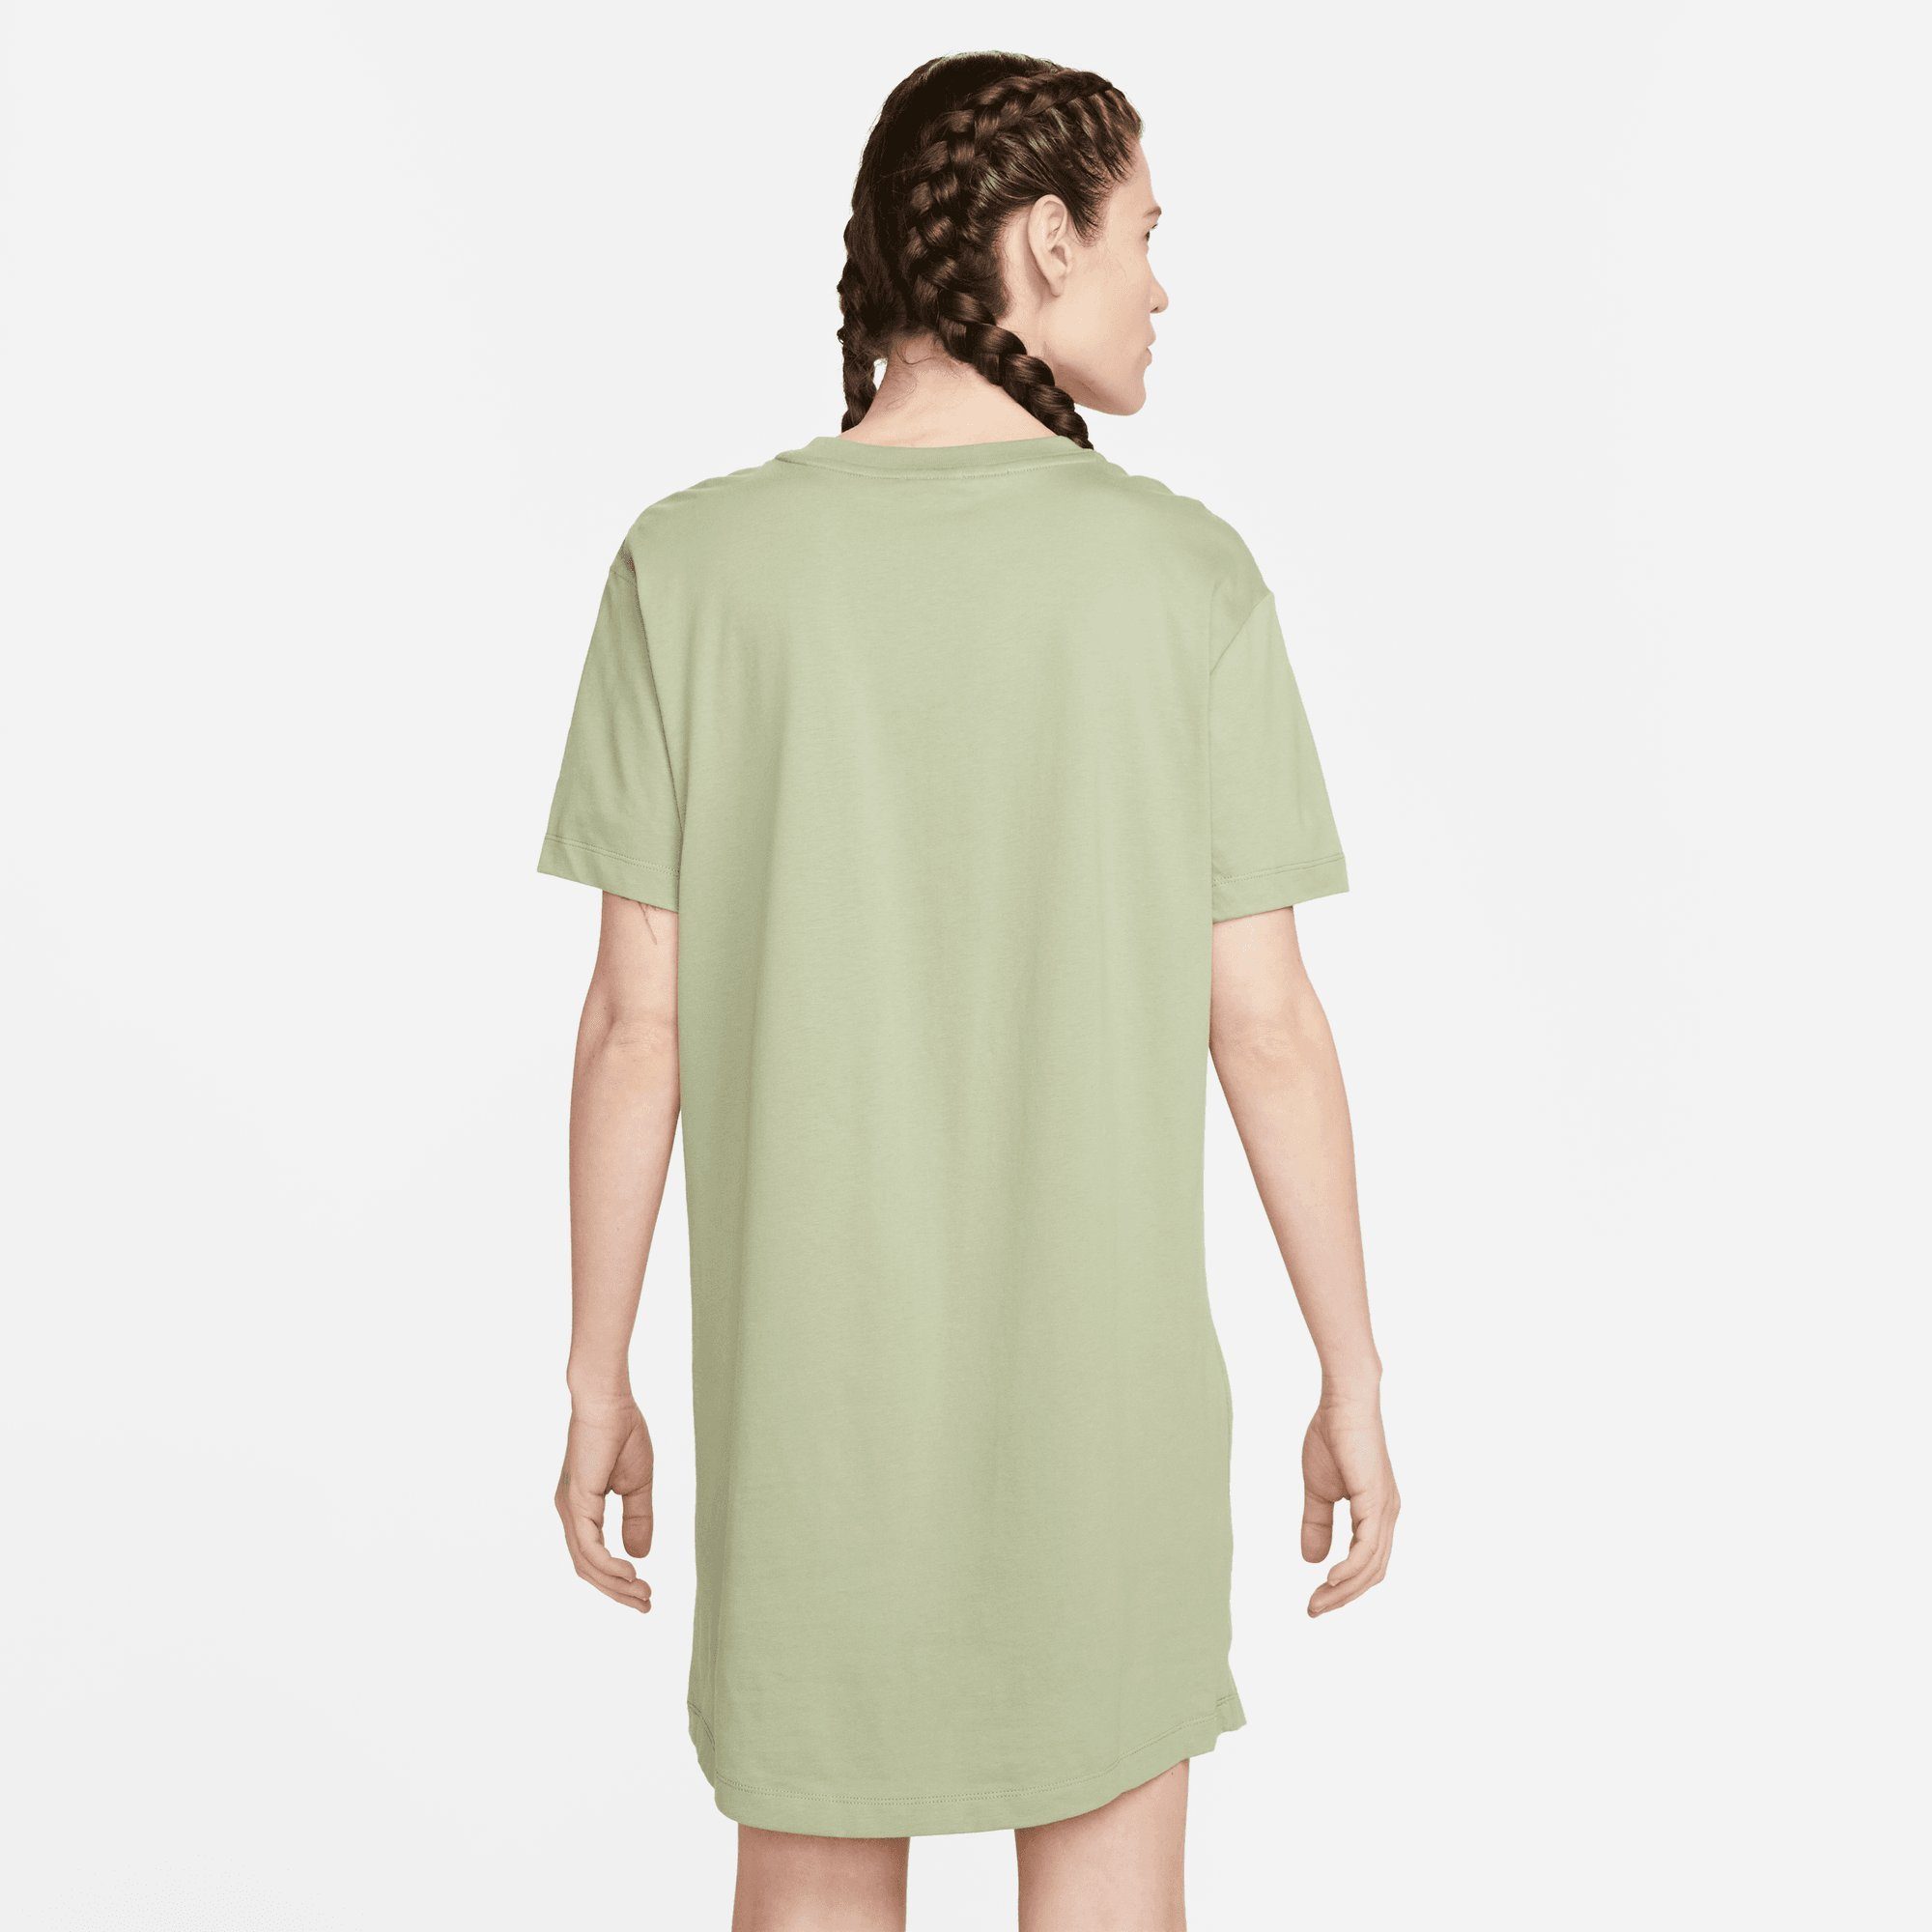 WOMEN'S DRESS OIL Nike ESSENTIAL GREEN/BLACK Sportswear Sommerkleid SHORT-SLEEVE